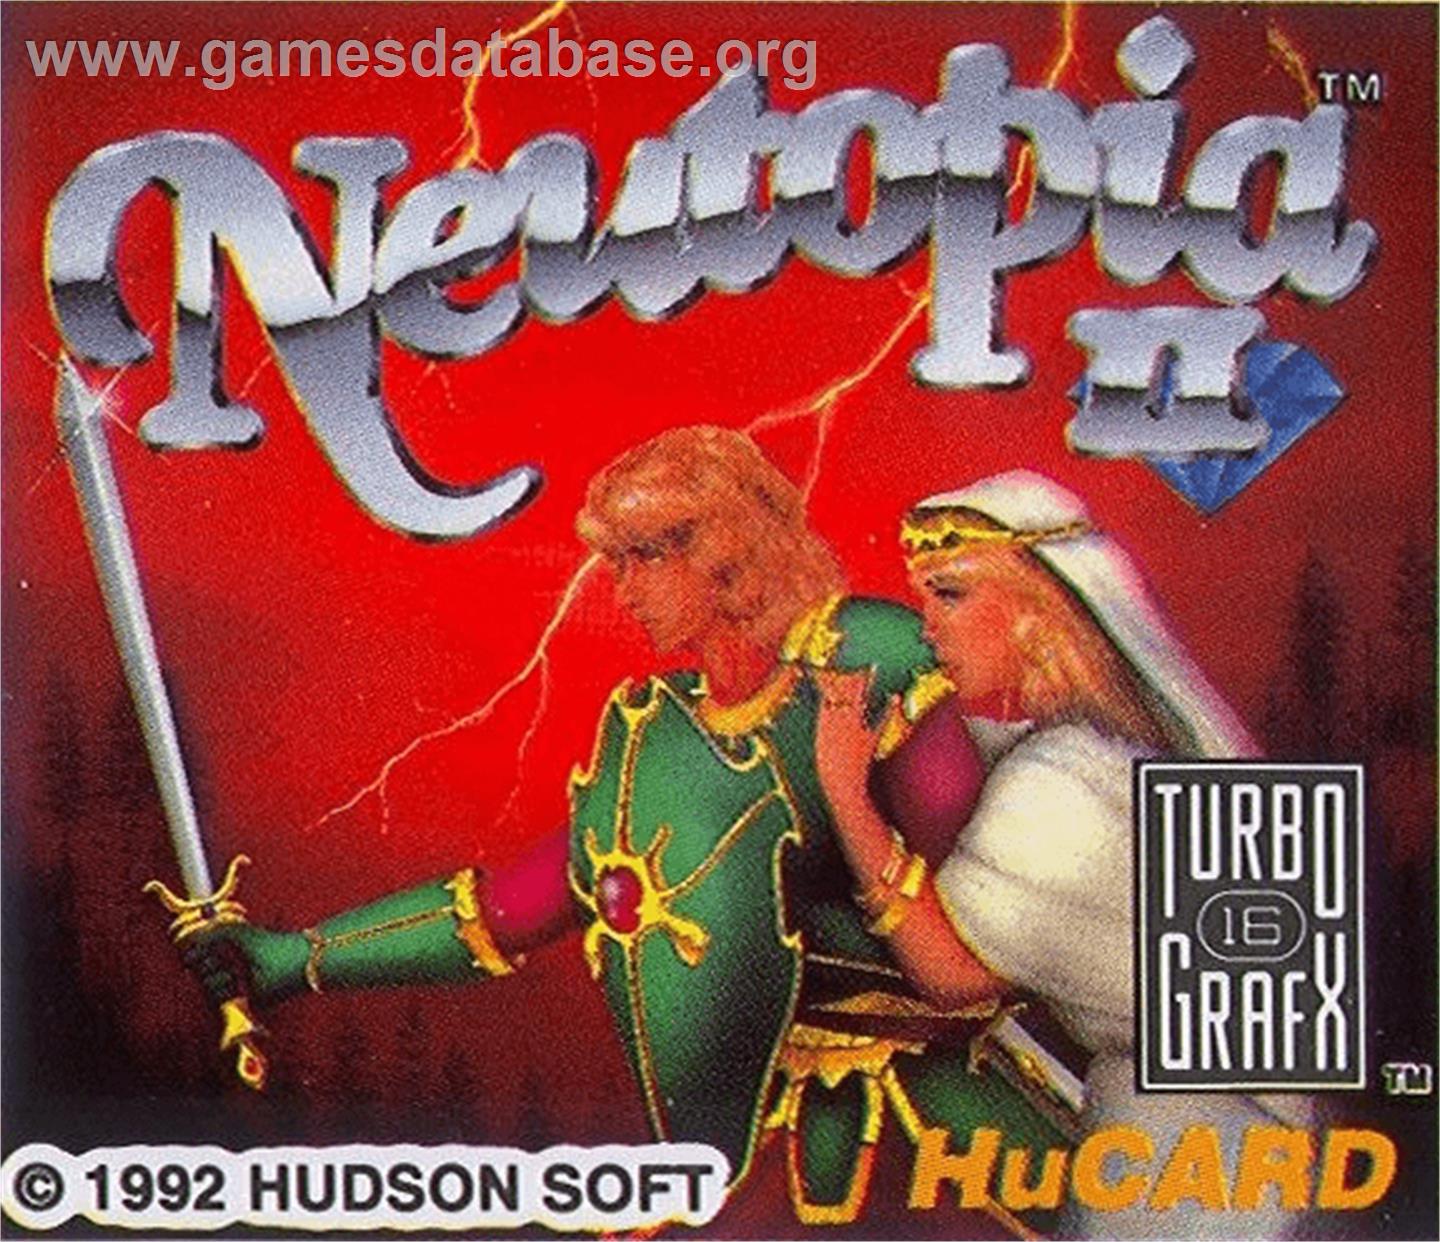 Neutopia II - NEC TurboGrafx-16 - Artwork - Cartridge Top